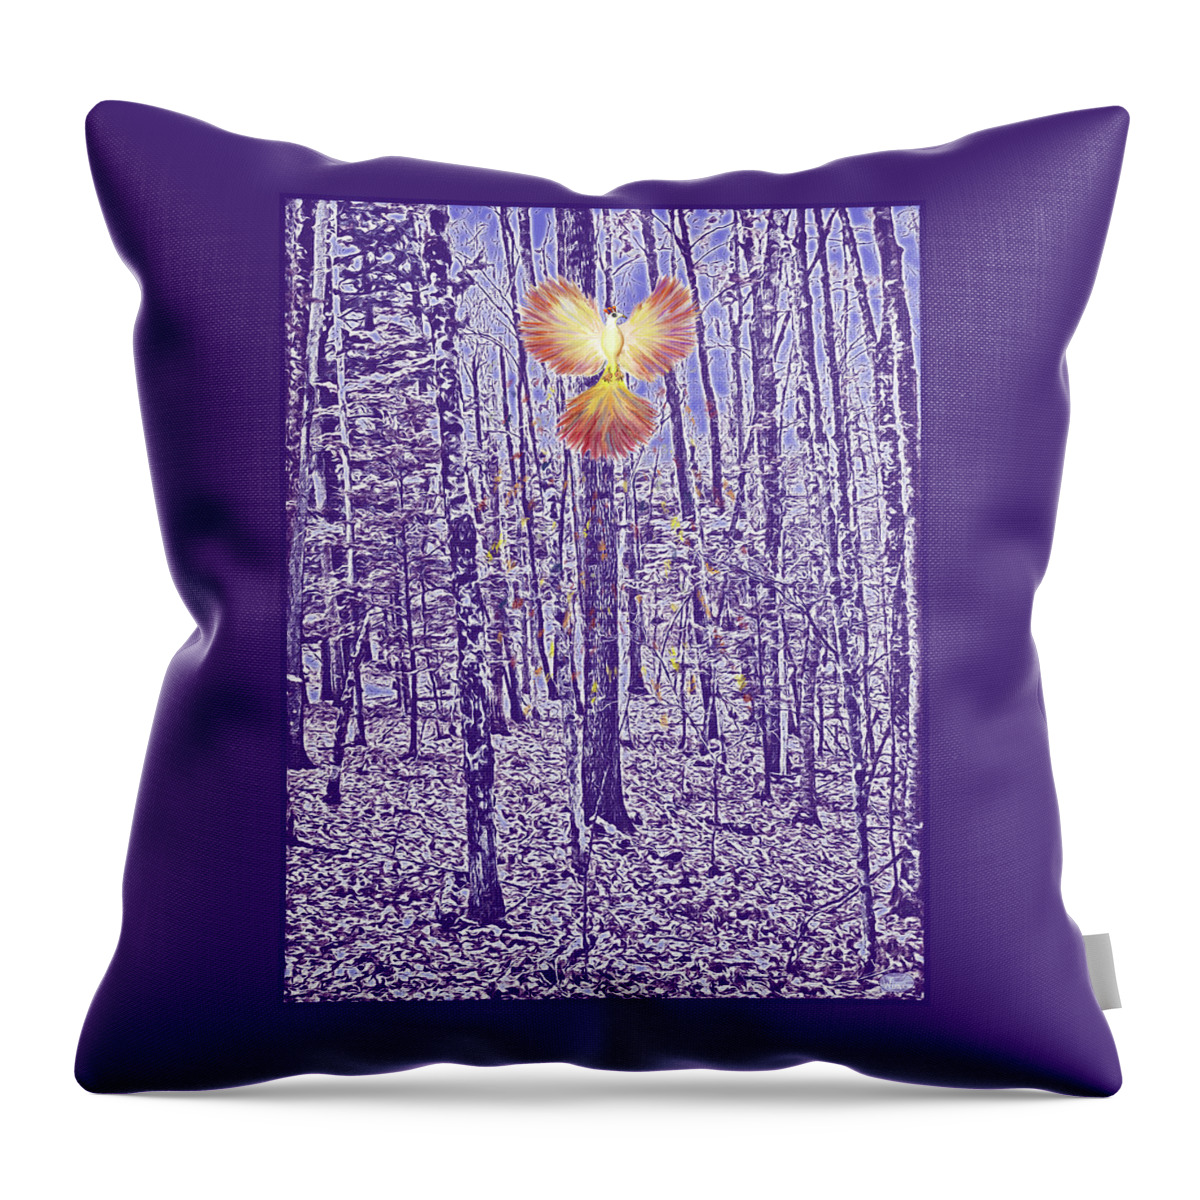 Firebird Throw Pillow featuring the mixed media Firebird in the Trees by Lise Winne